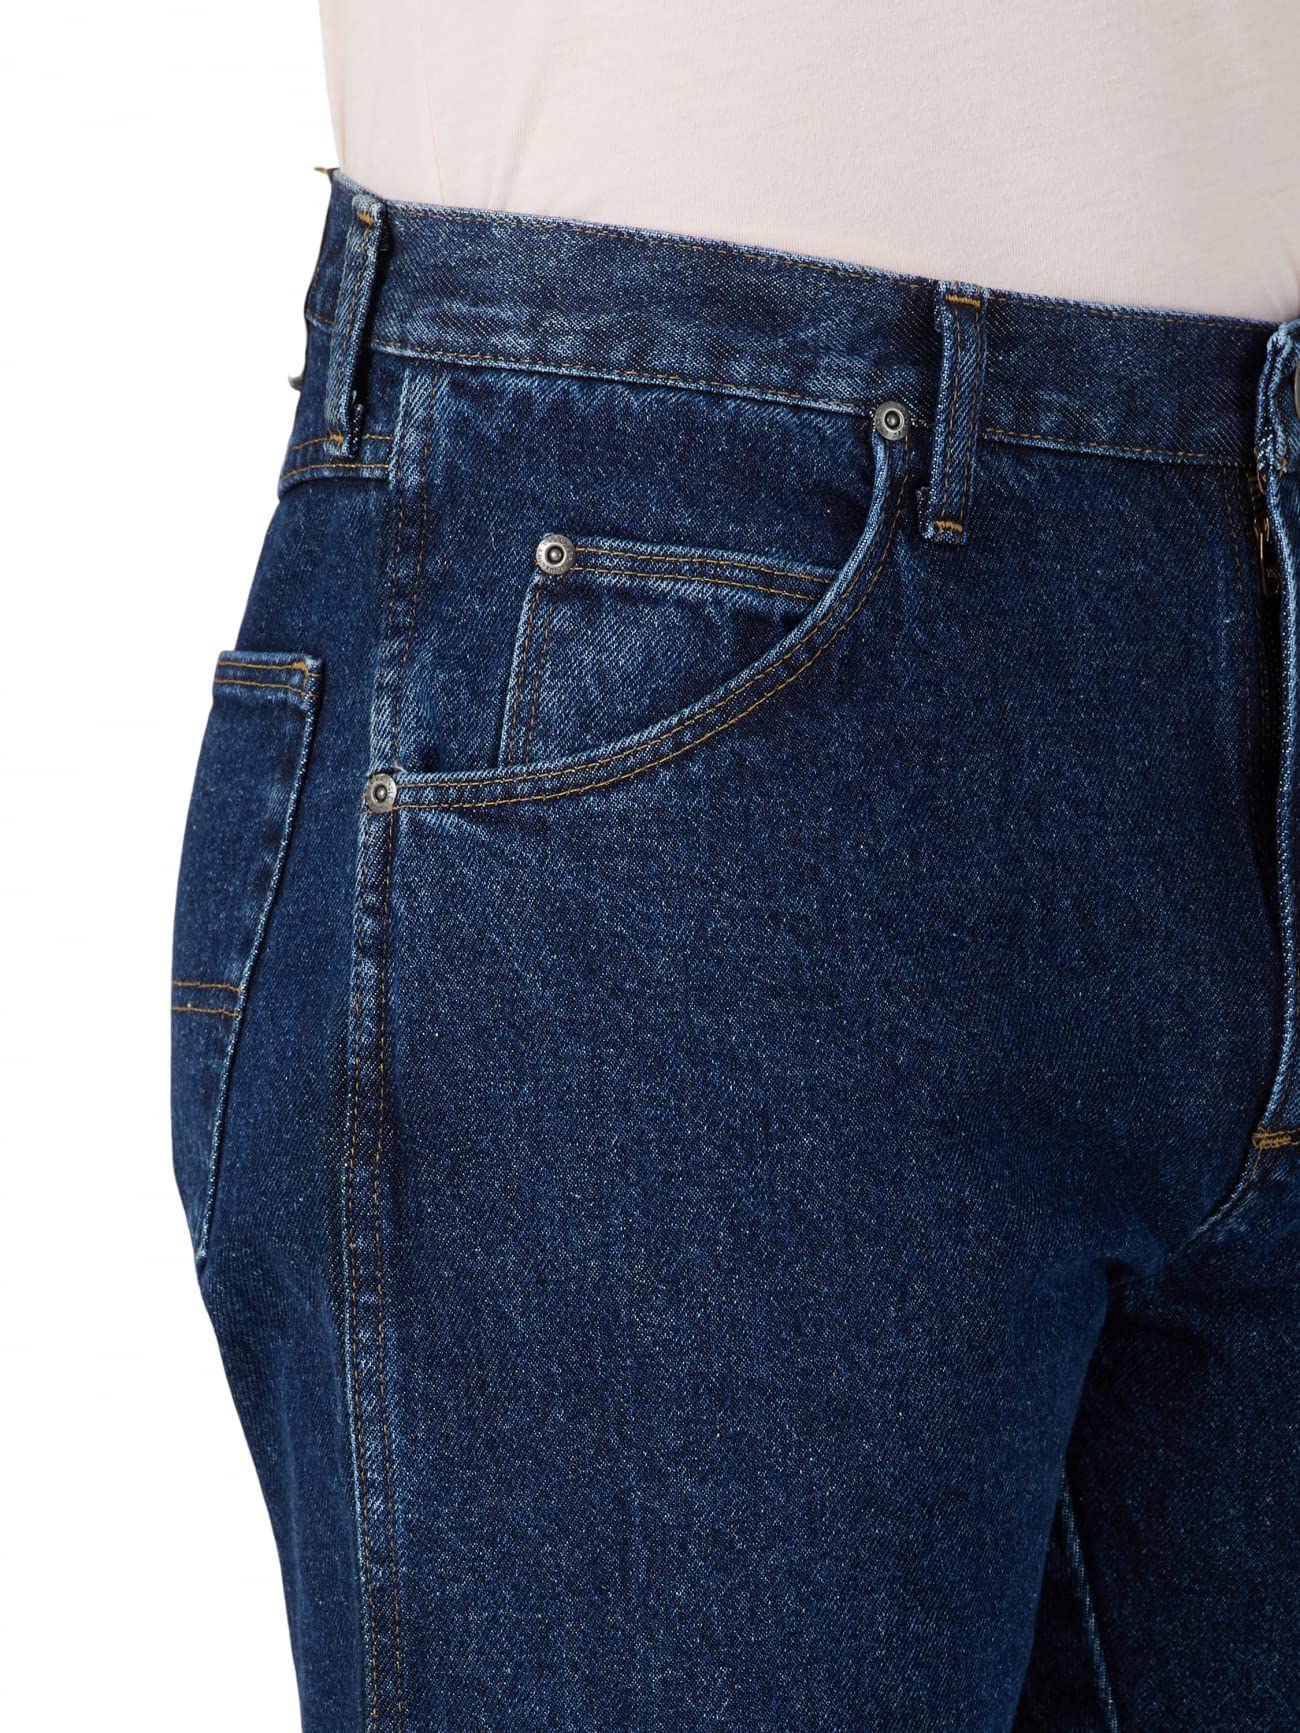 Wrangler Authentics Men's Classic 5-Pocket Regular Fit Cotton Jean, Dark Rinse, 38W x 32L